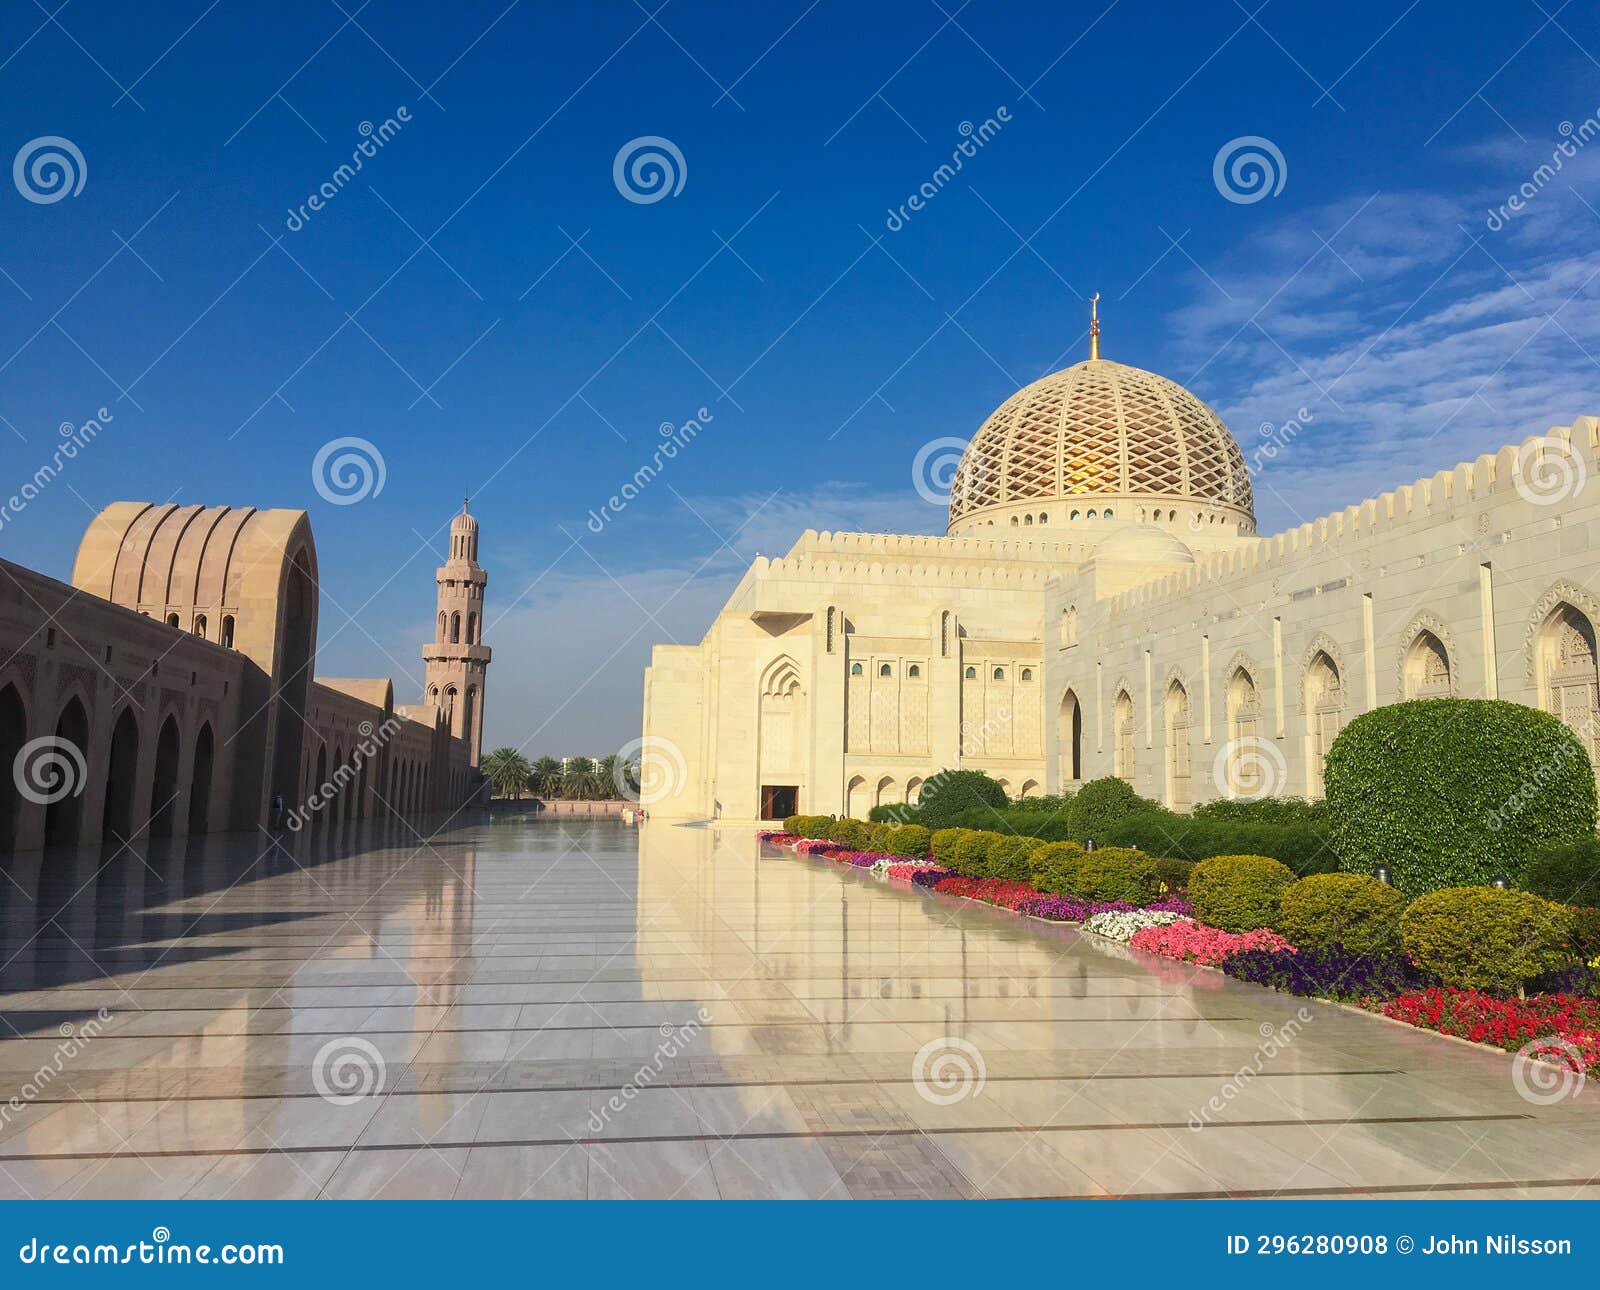 the sultan qaboos mosque in mascat, oman